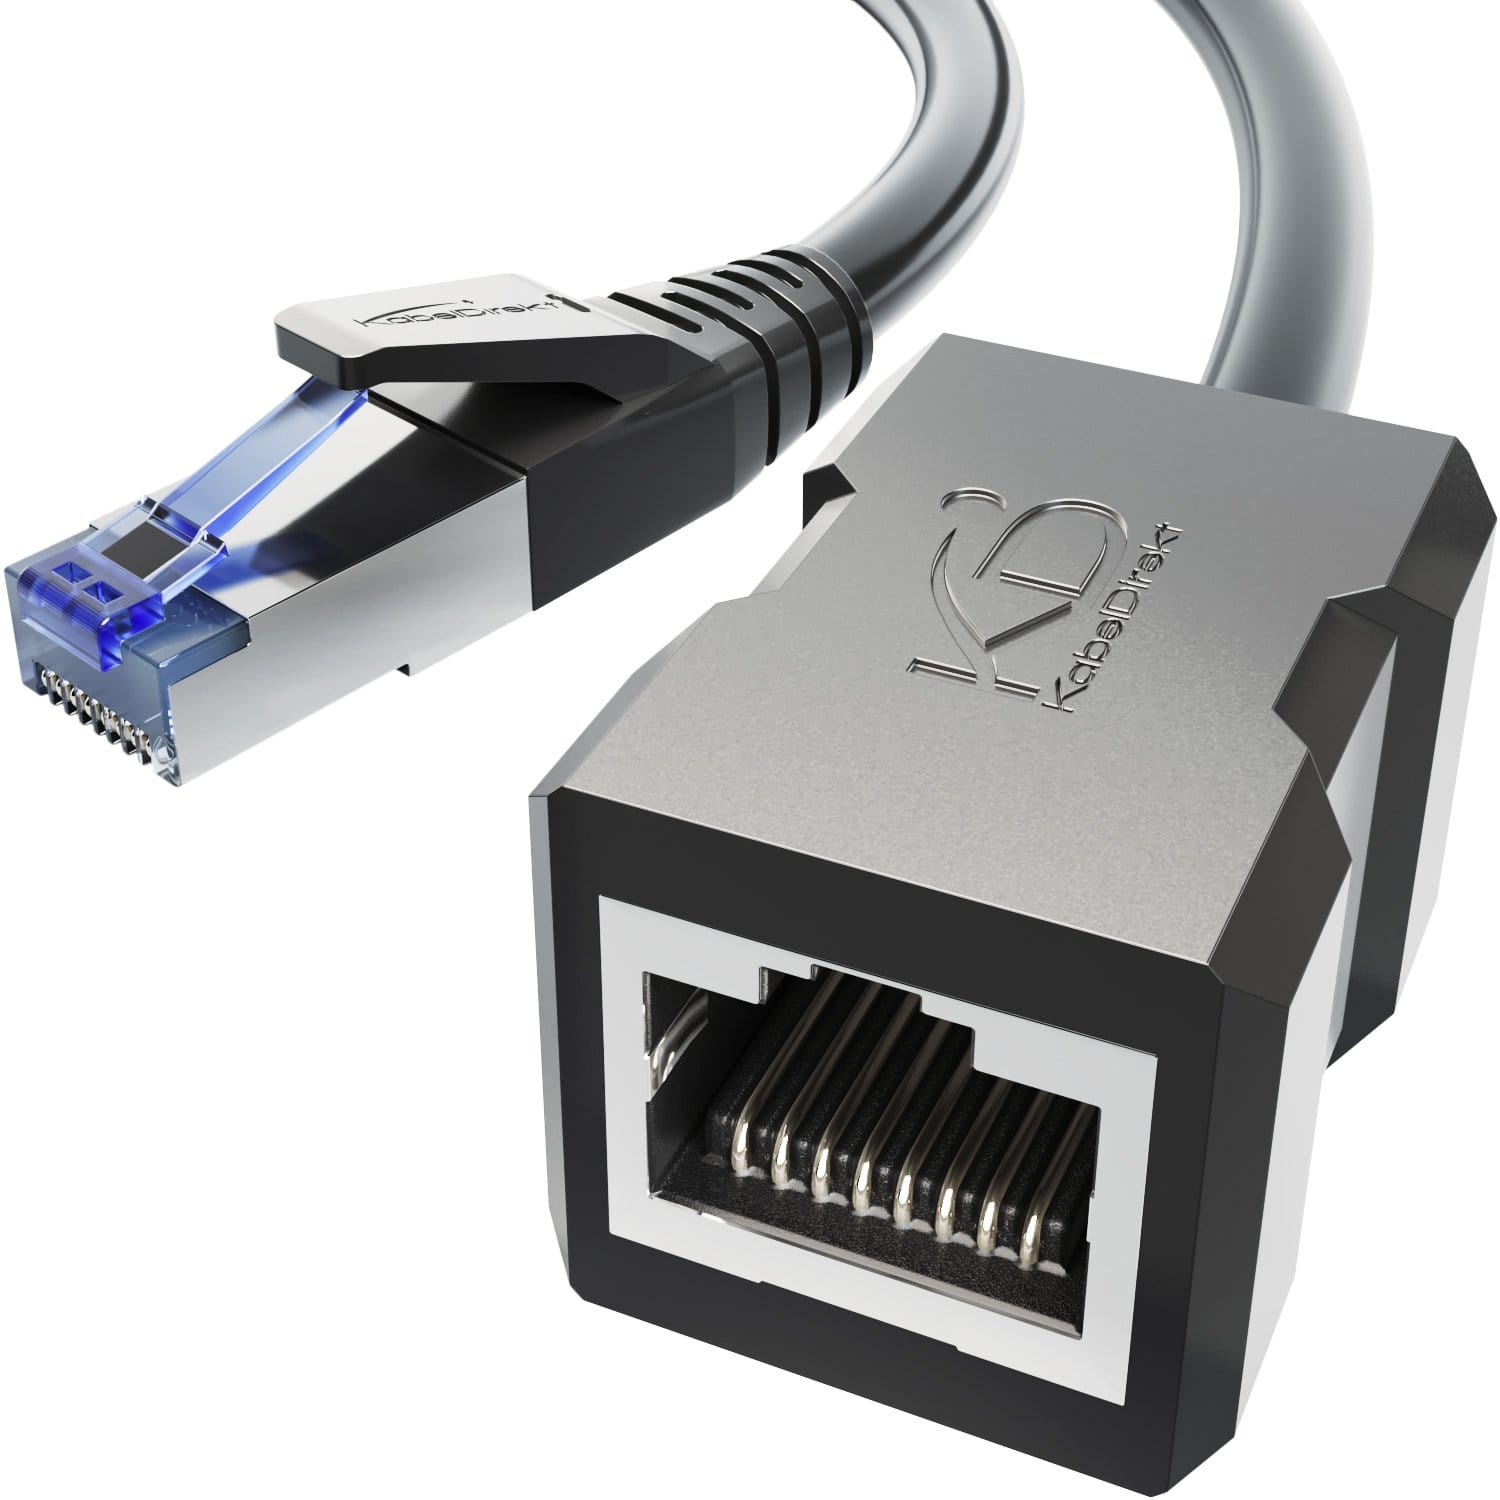 Cat7 Ethernet Cable 75FT Black, Intelart Network cord Cat-7 Flat RJ45  Computer Internet Lan Router